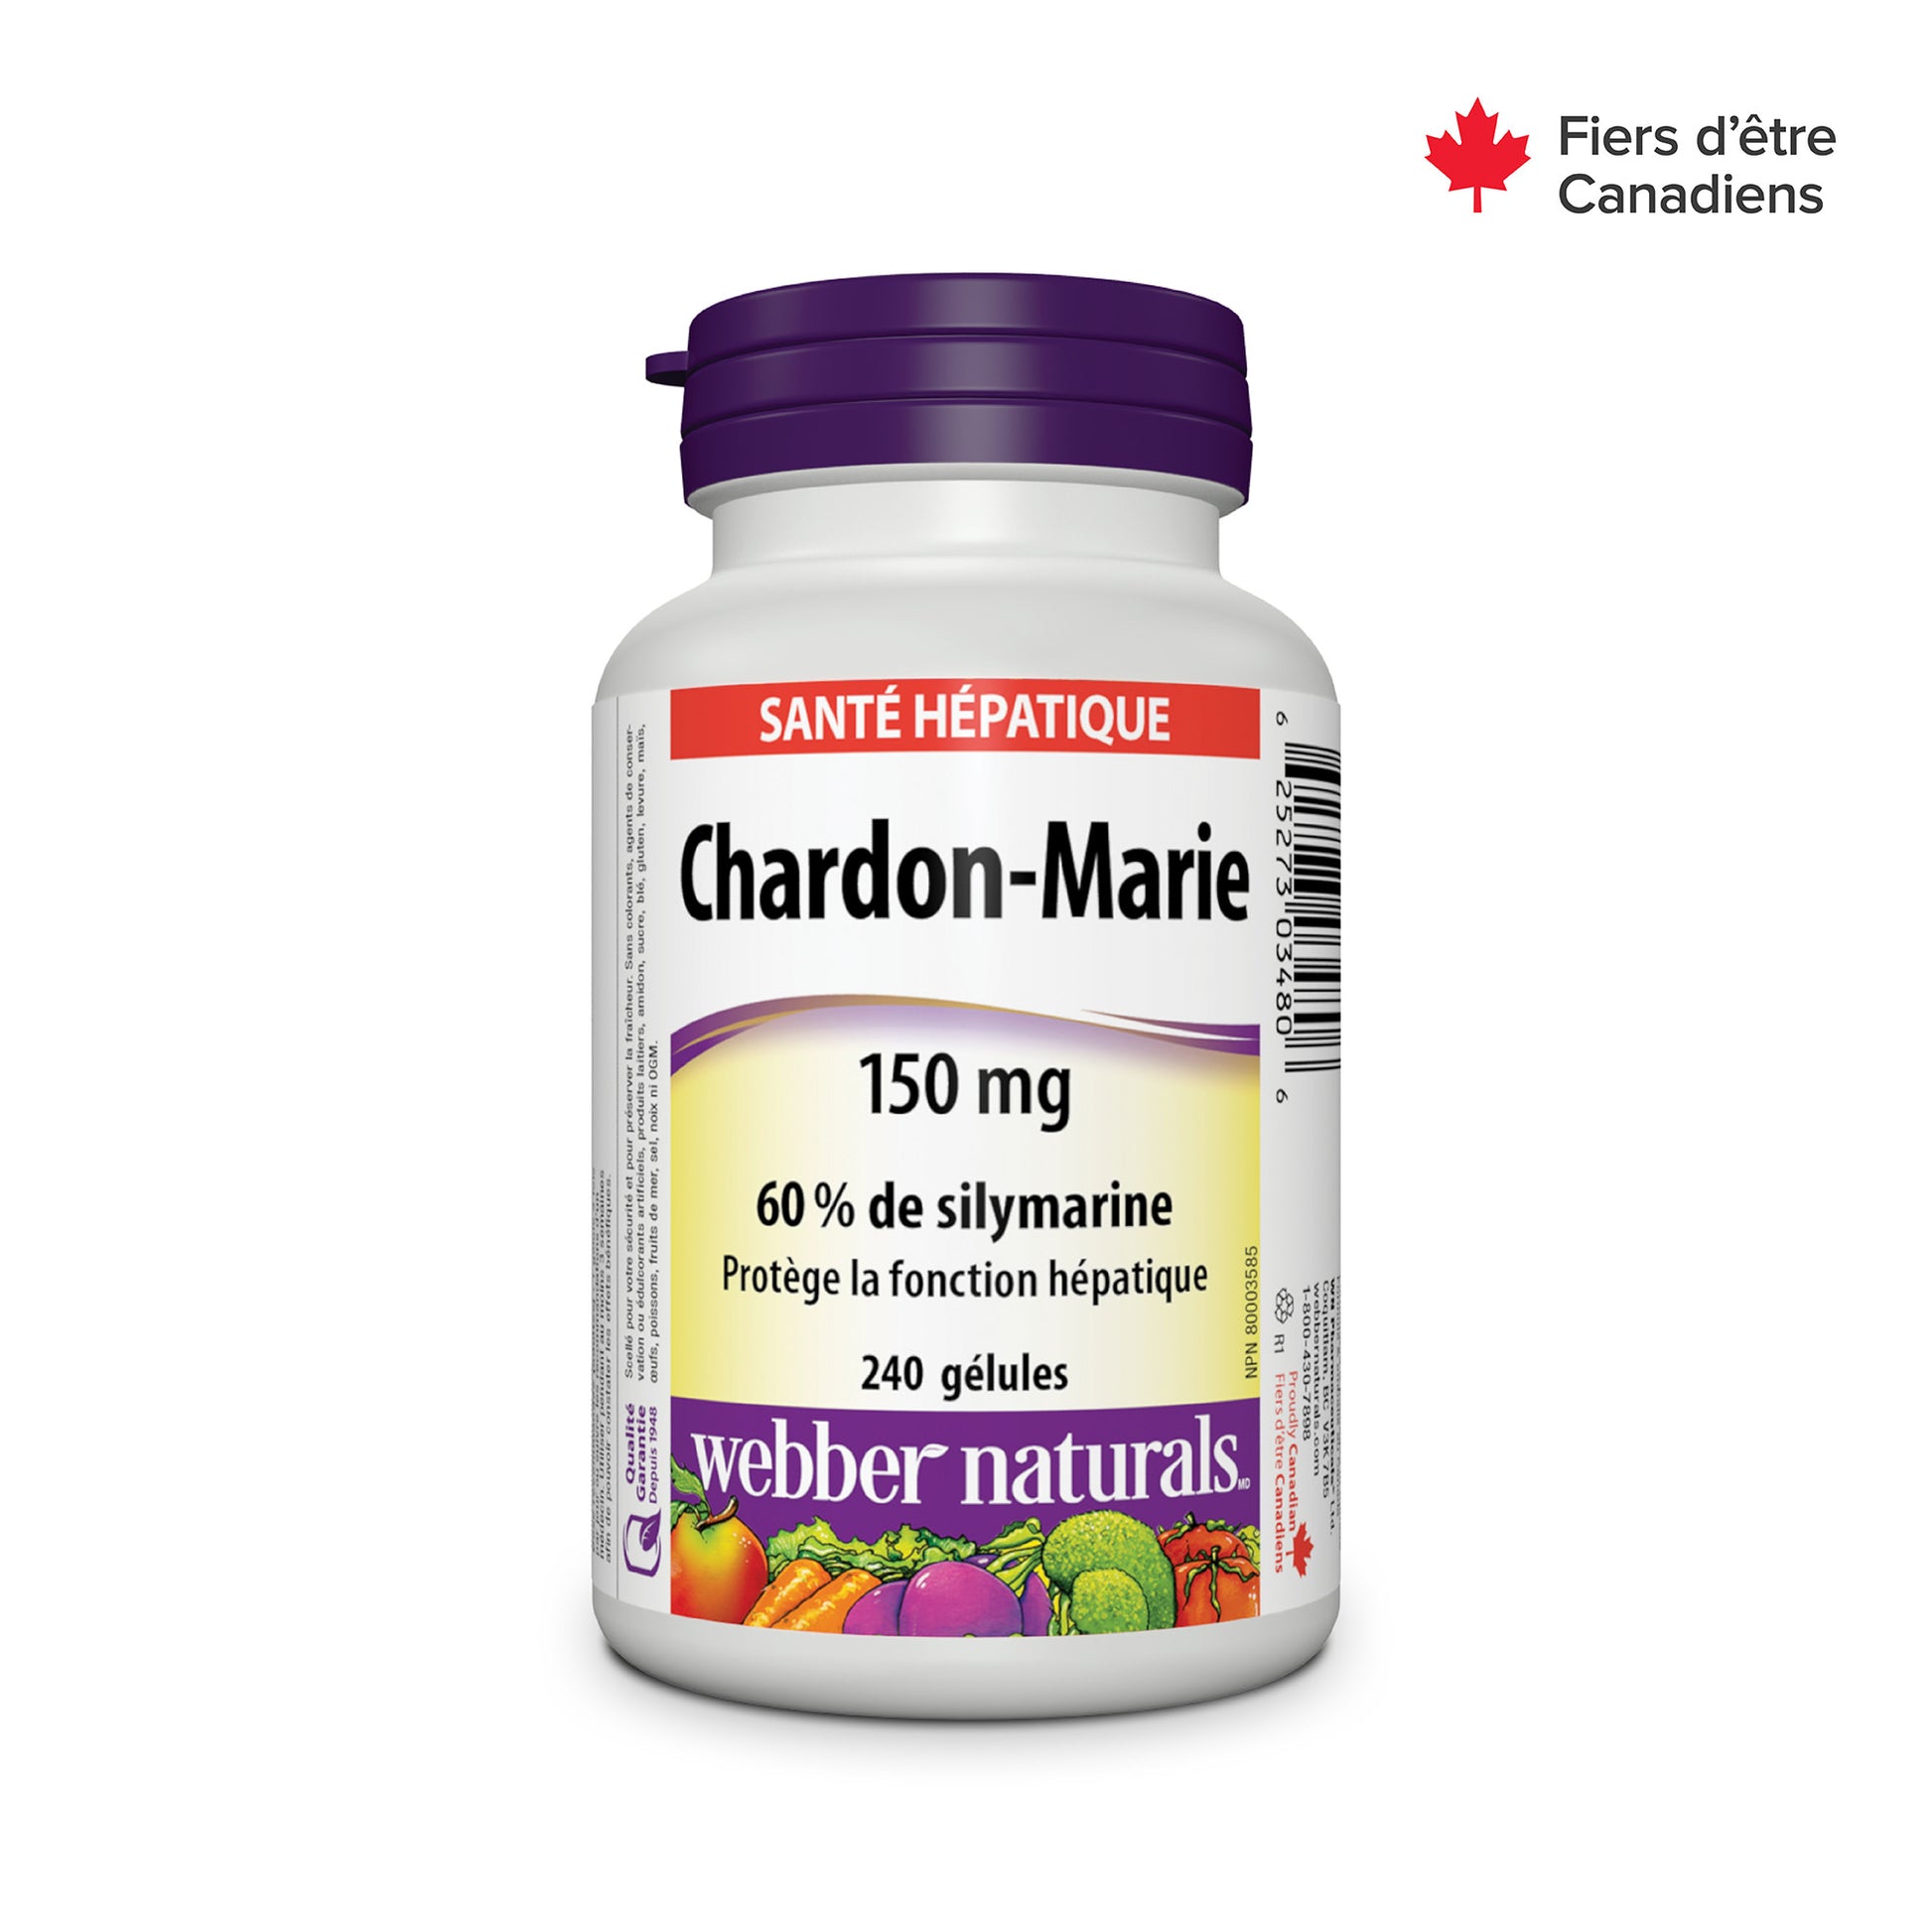 Chardon-Marie 60 % de silymarine 150 mg for Webber Naturals|v|hi-res|WN3480